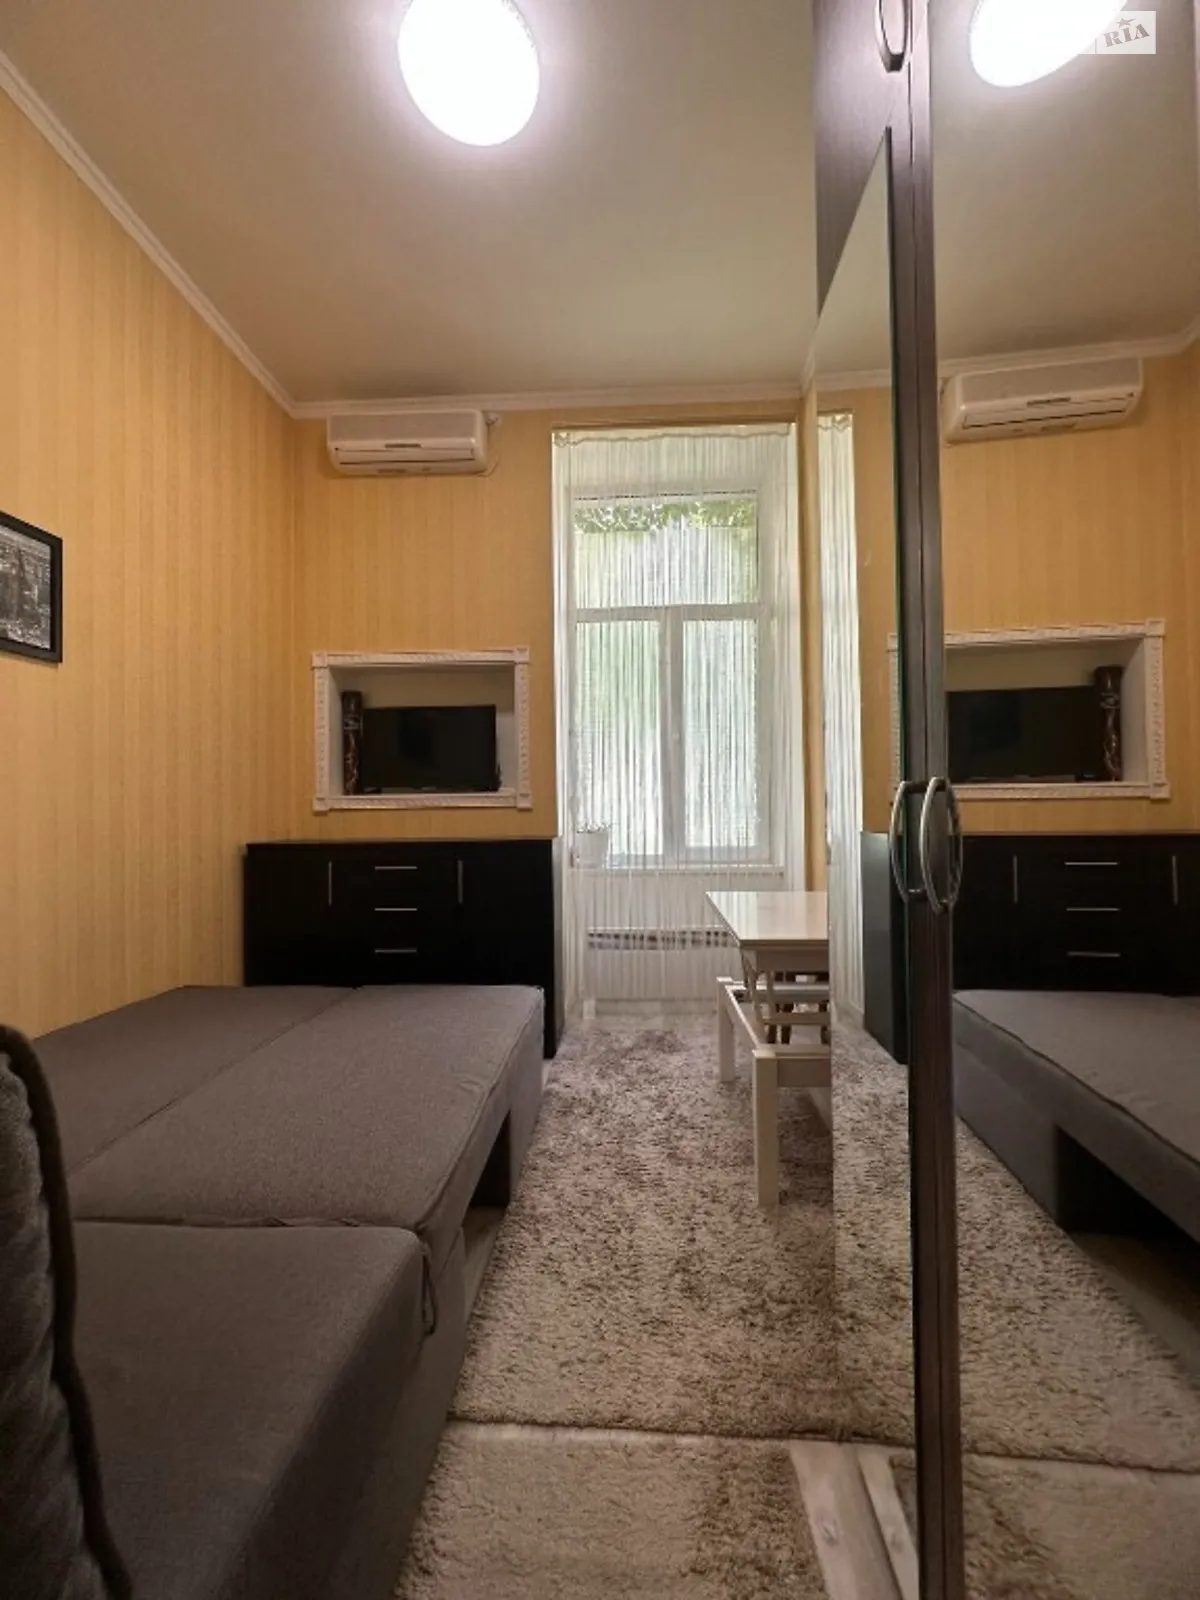 Продается комната 21 кв. м в Одессе, цена: 19000 $ - фото 1